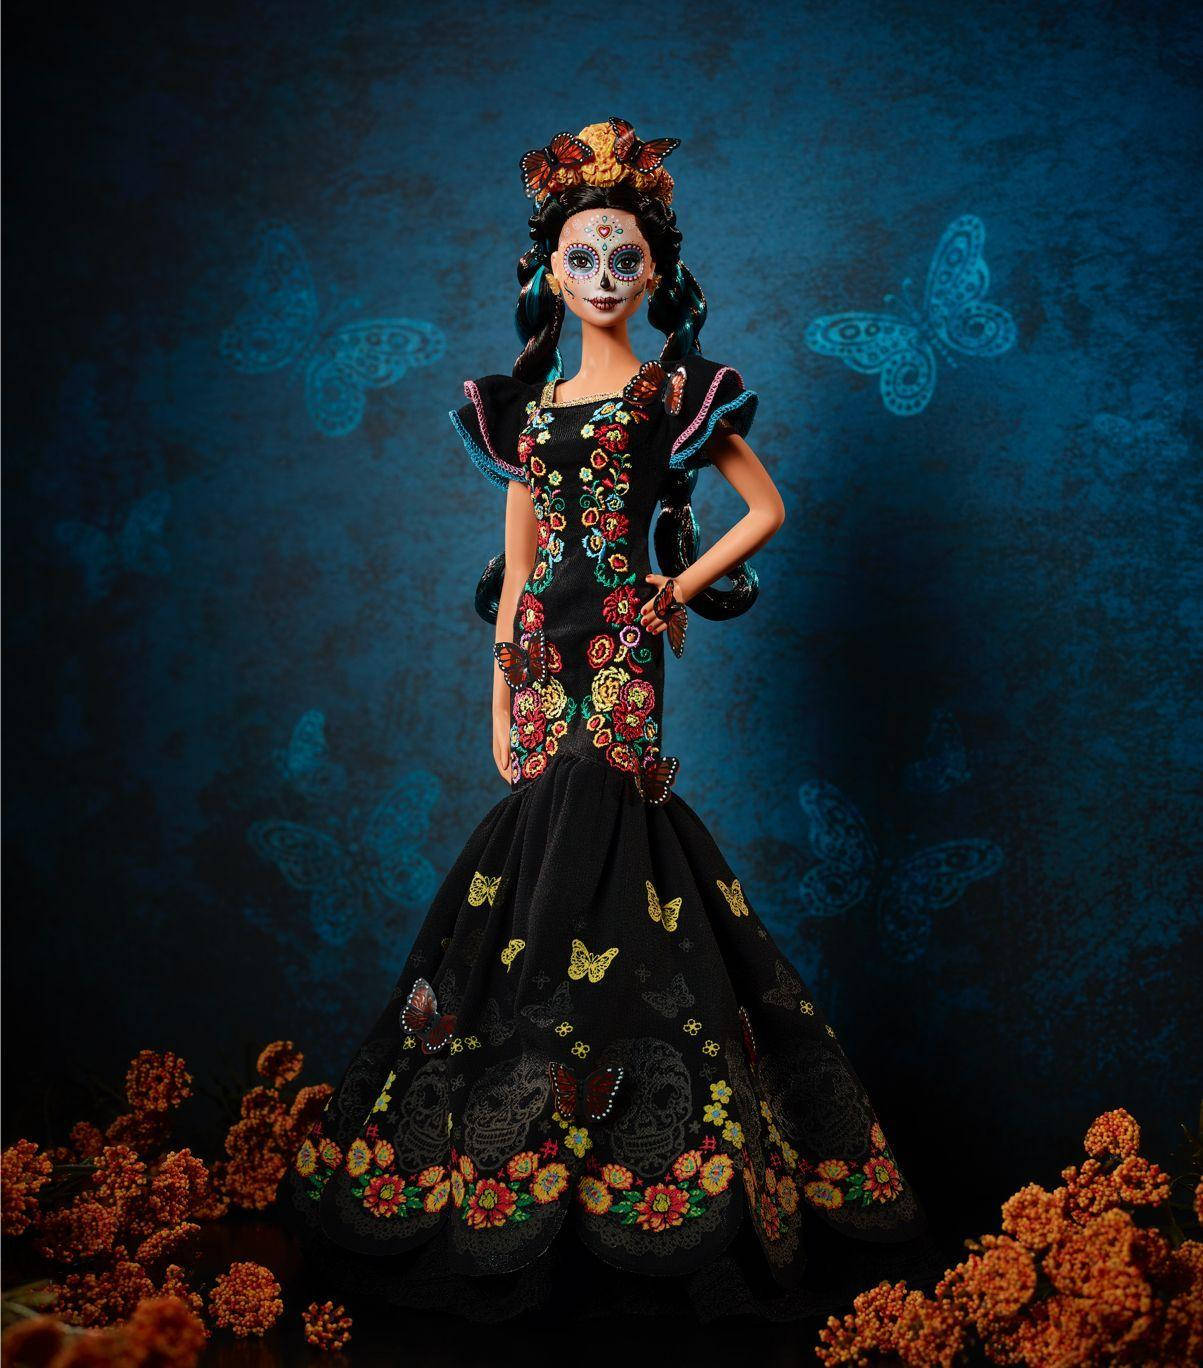 Captivating Dia De Los Muertos doll donned in traditional attire. Wallpaper